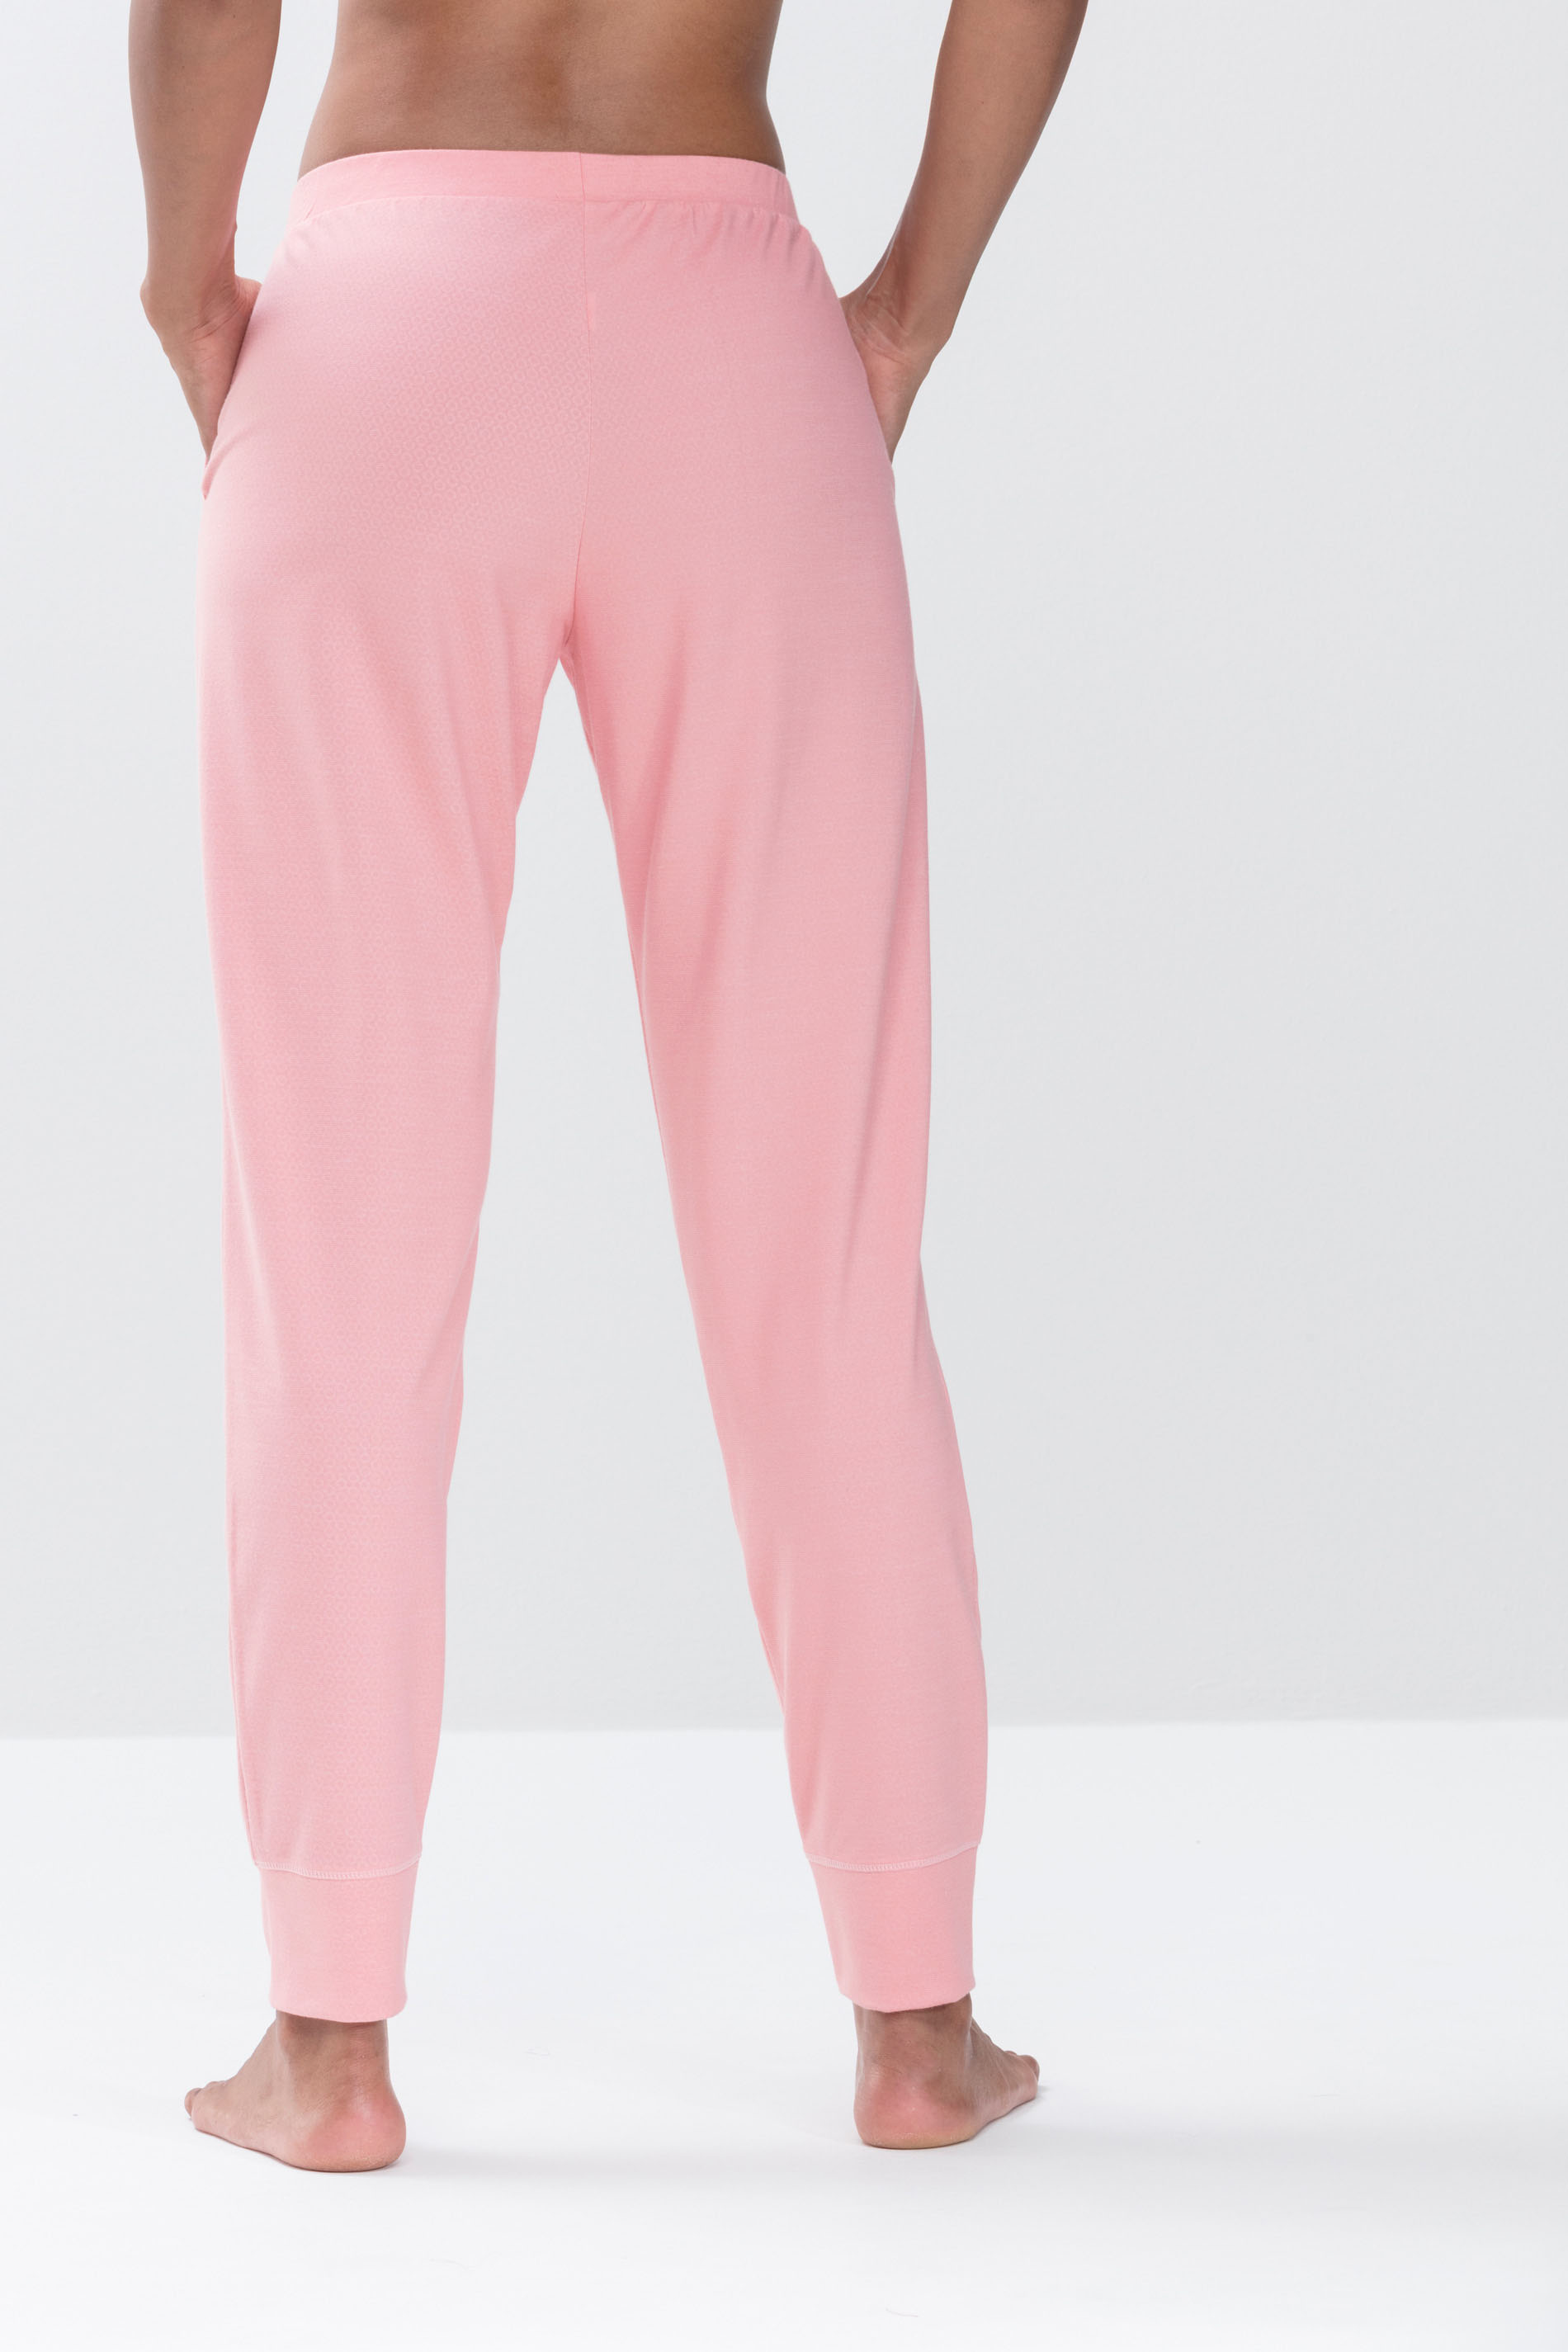 Broek lang Powder Pink Serie Zzzleepwear Achteraanzicht | mey®